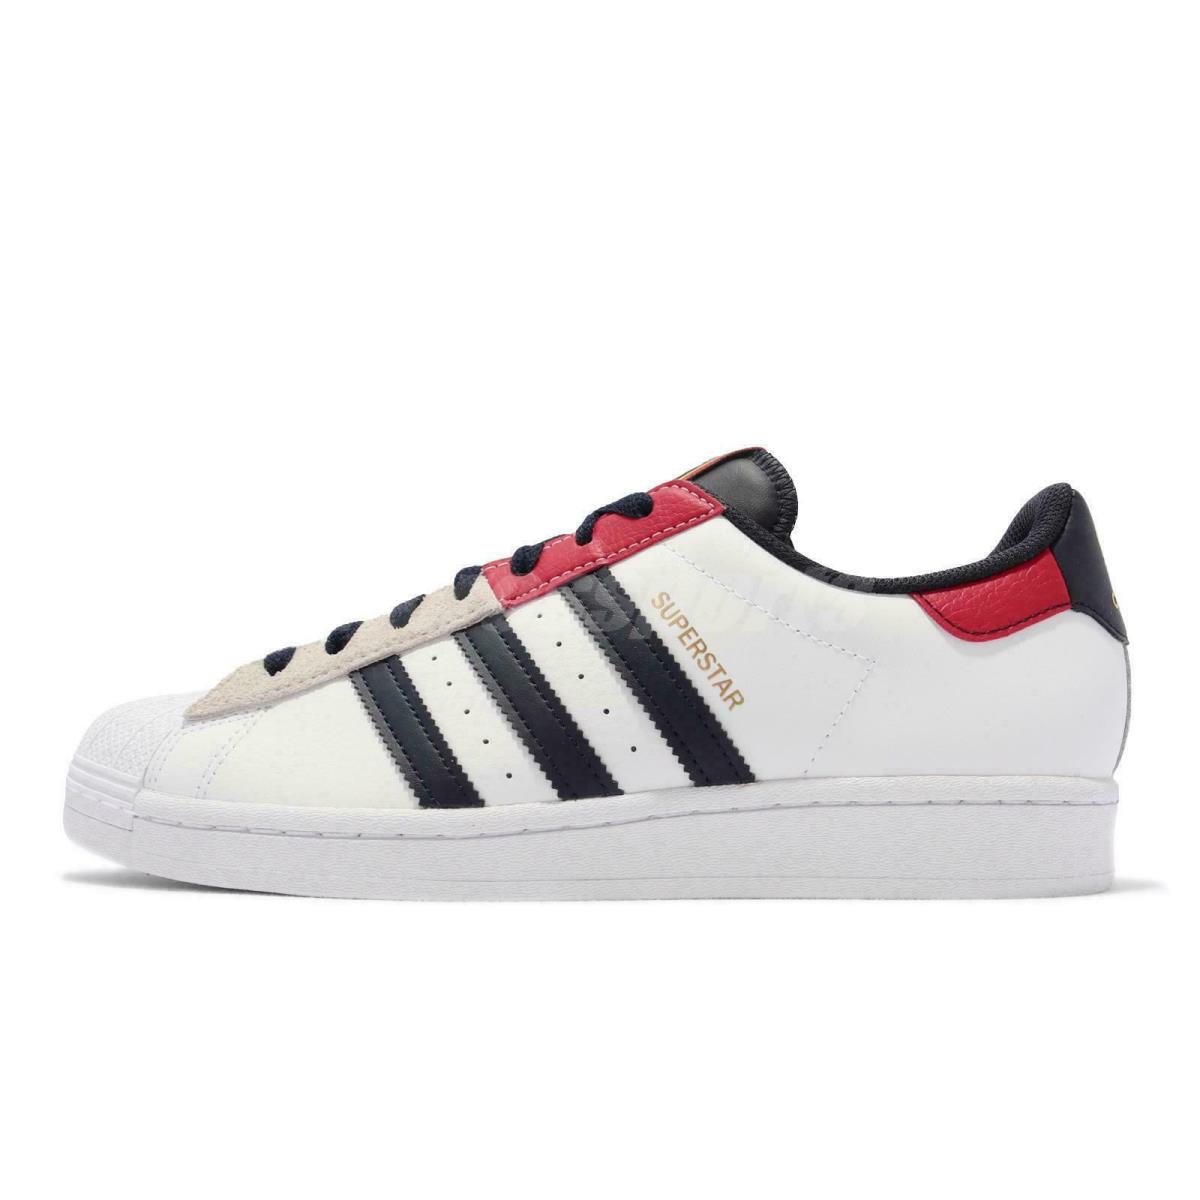 H05250 Adidas Superstar Men Casual Shoe Legend Ink/red/white